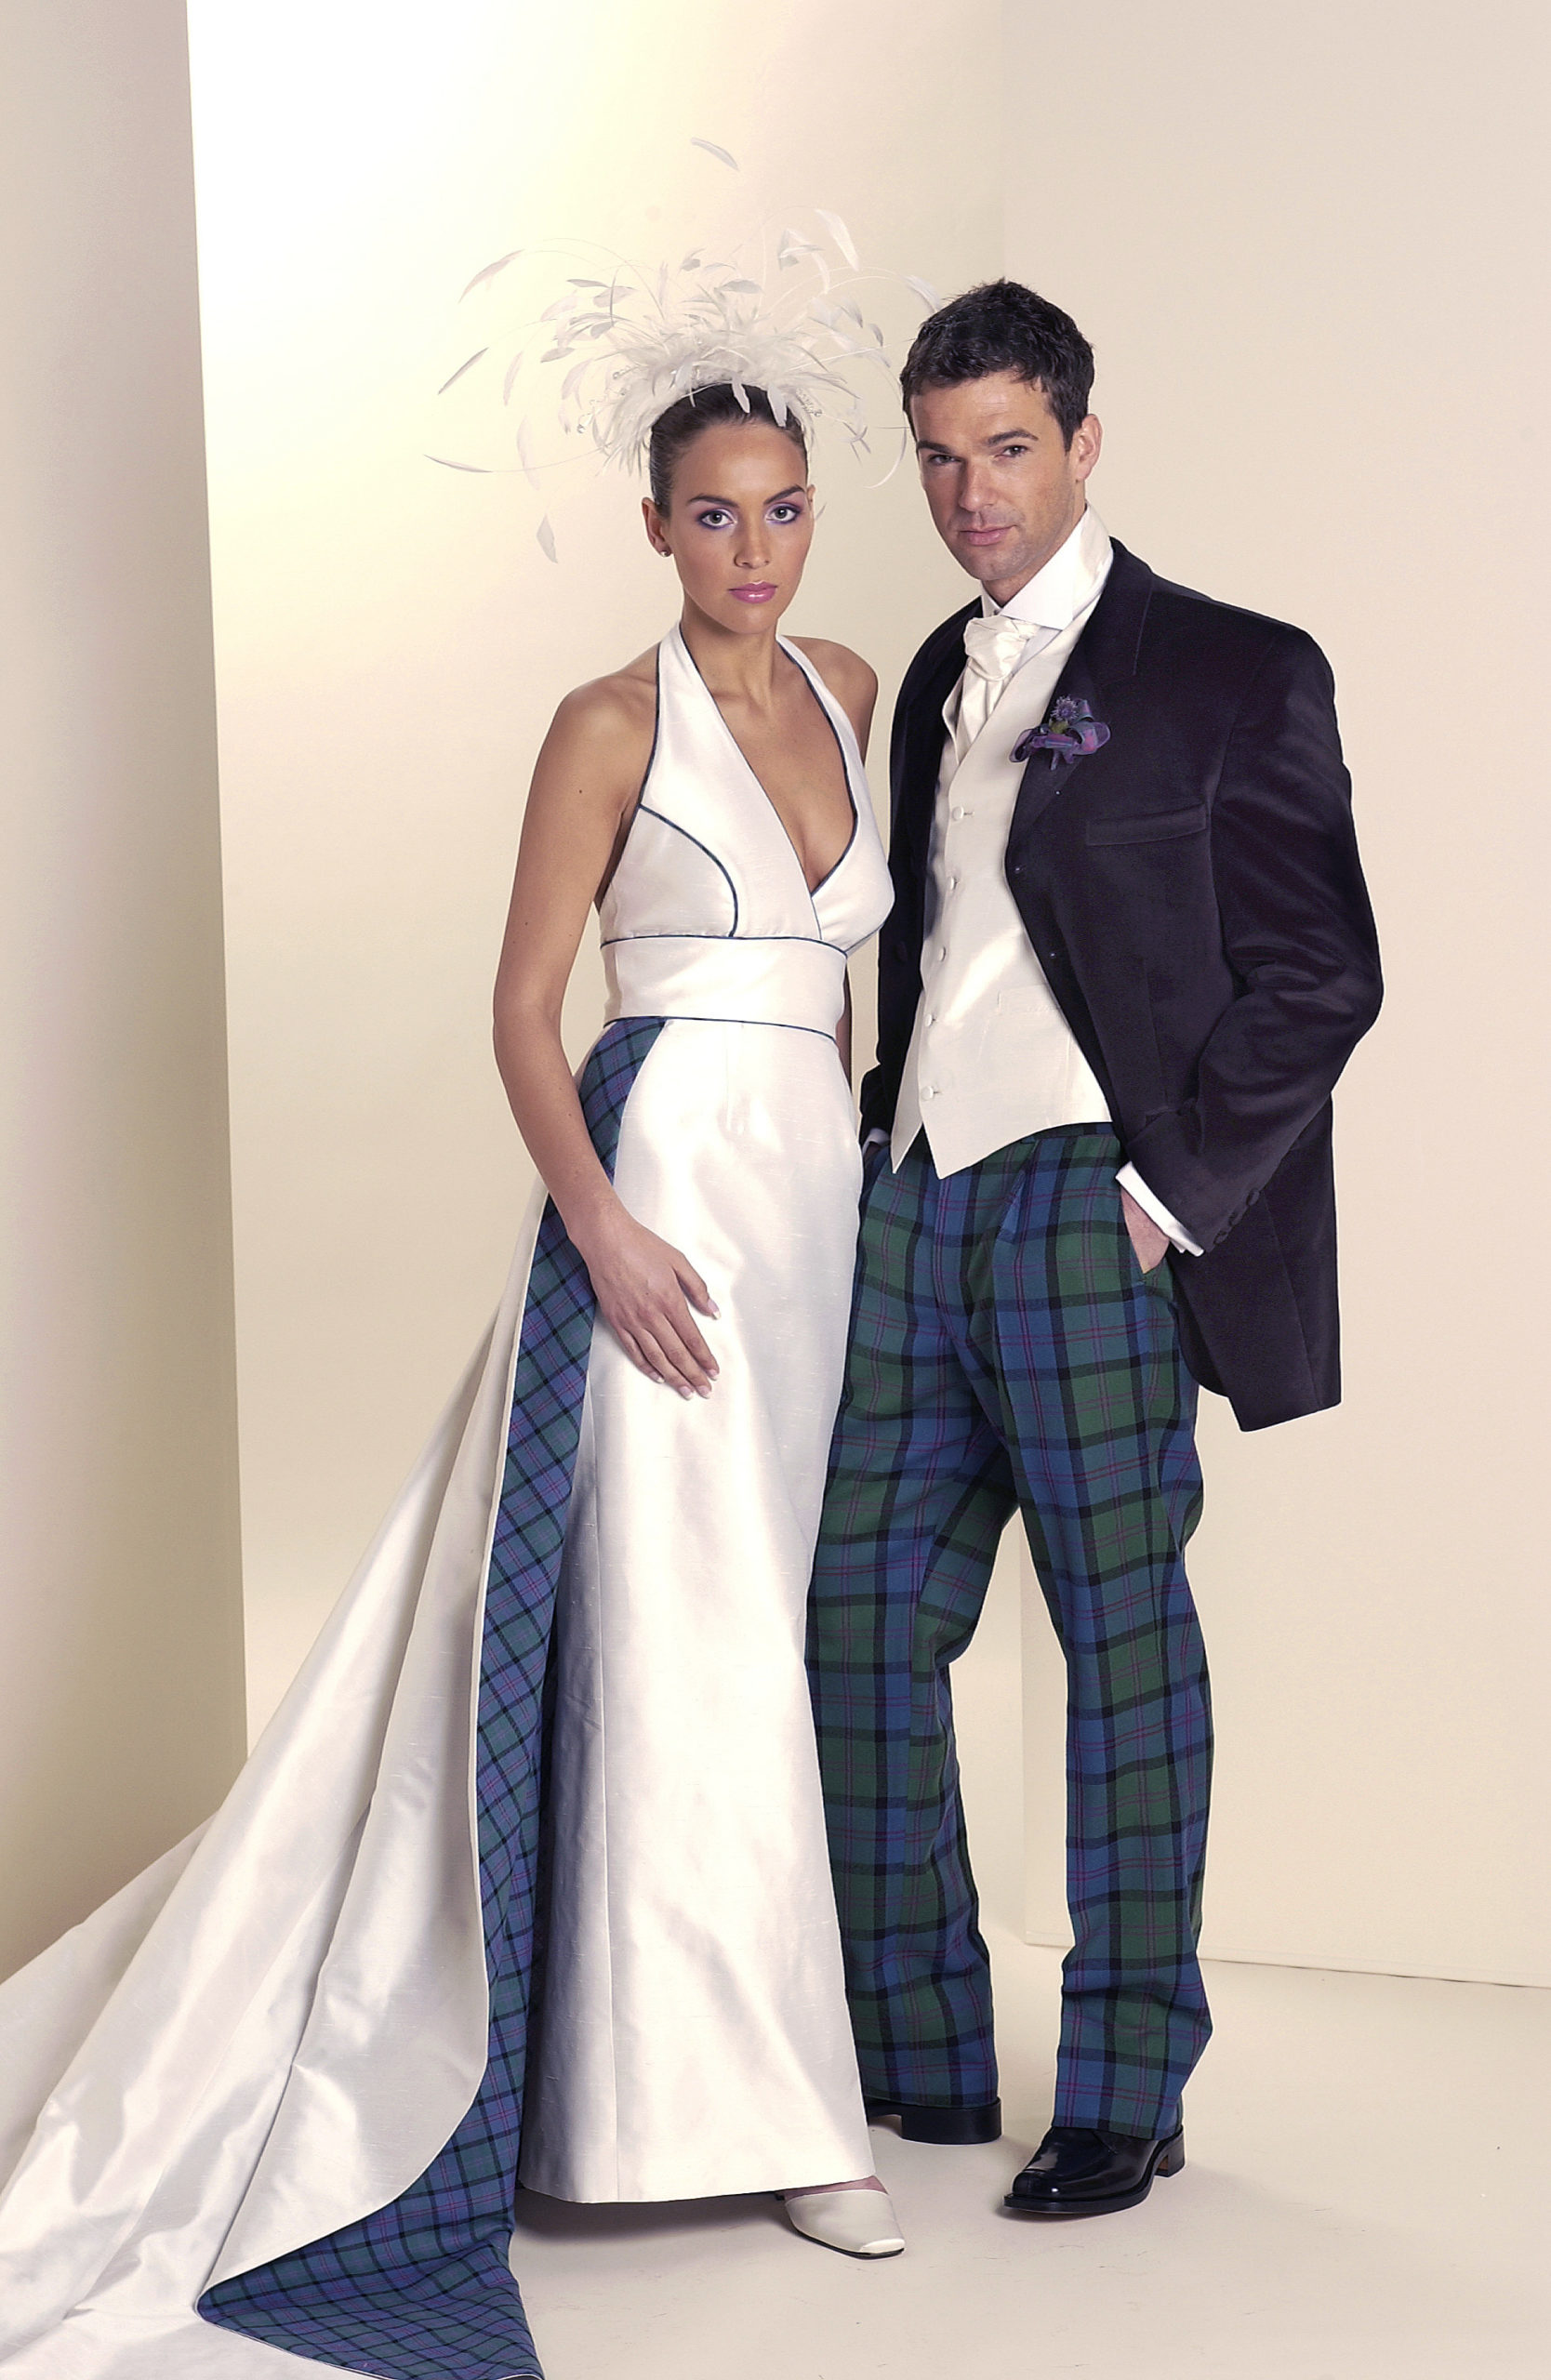 Abigail Wedding Dress With Tartans | Pro Scottish LLC